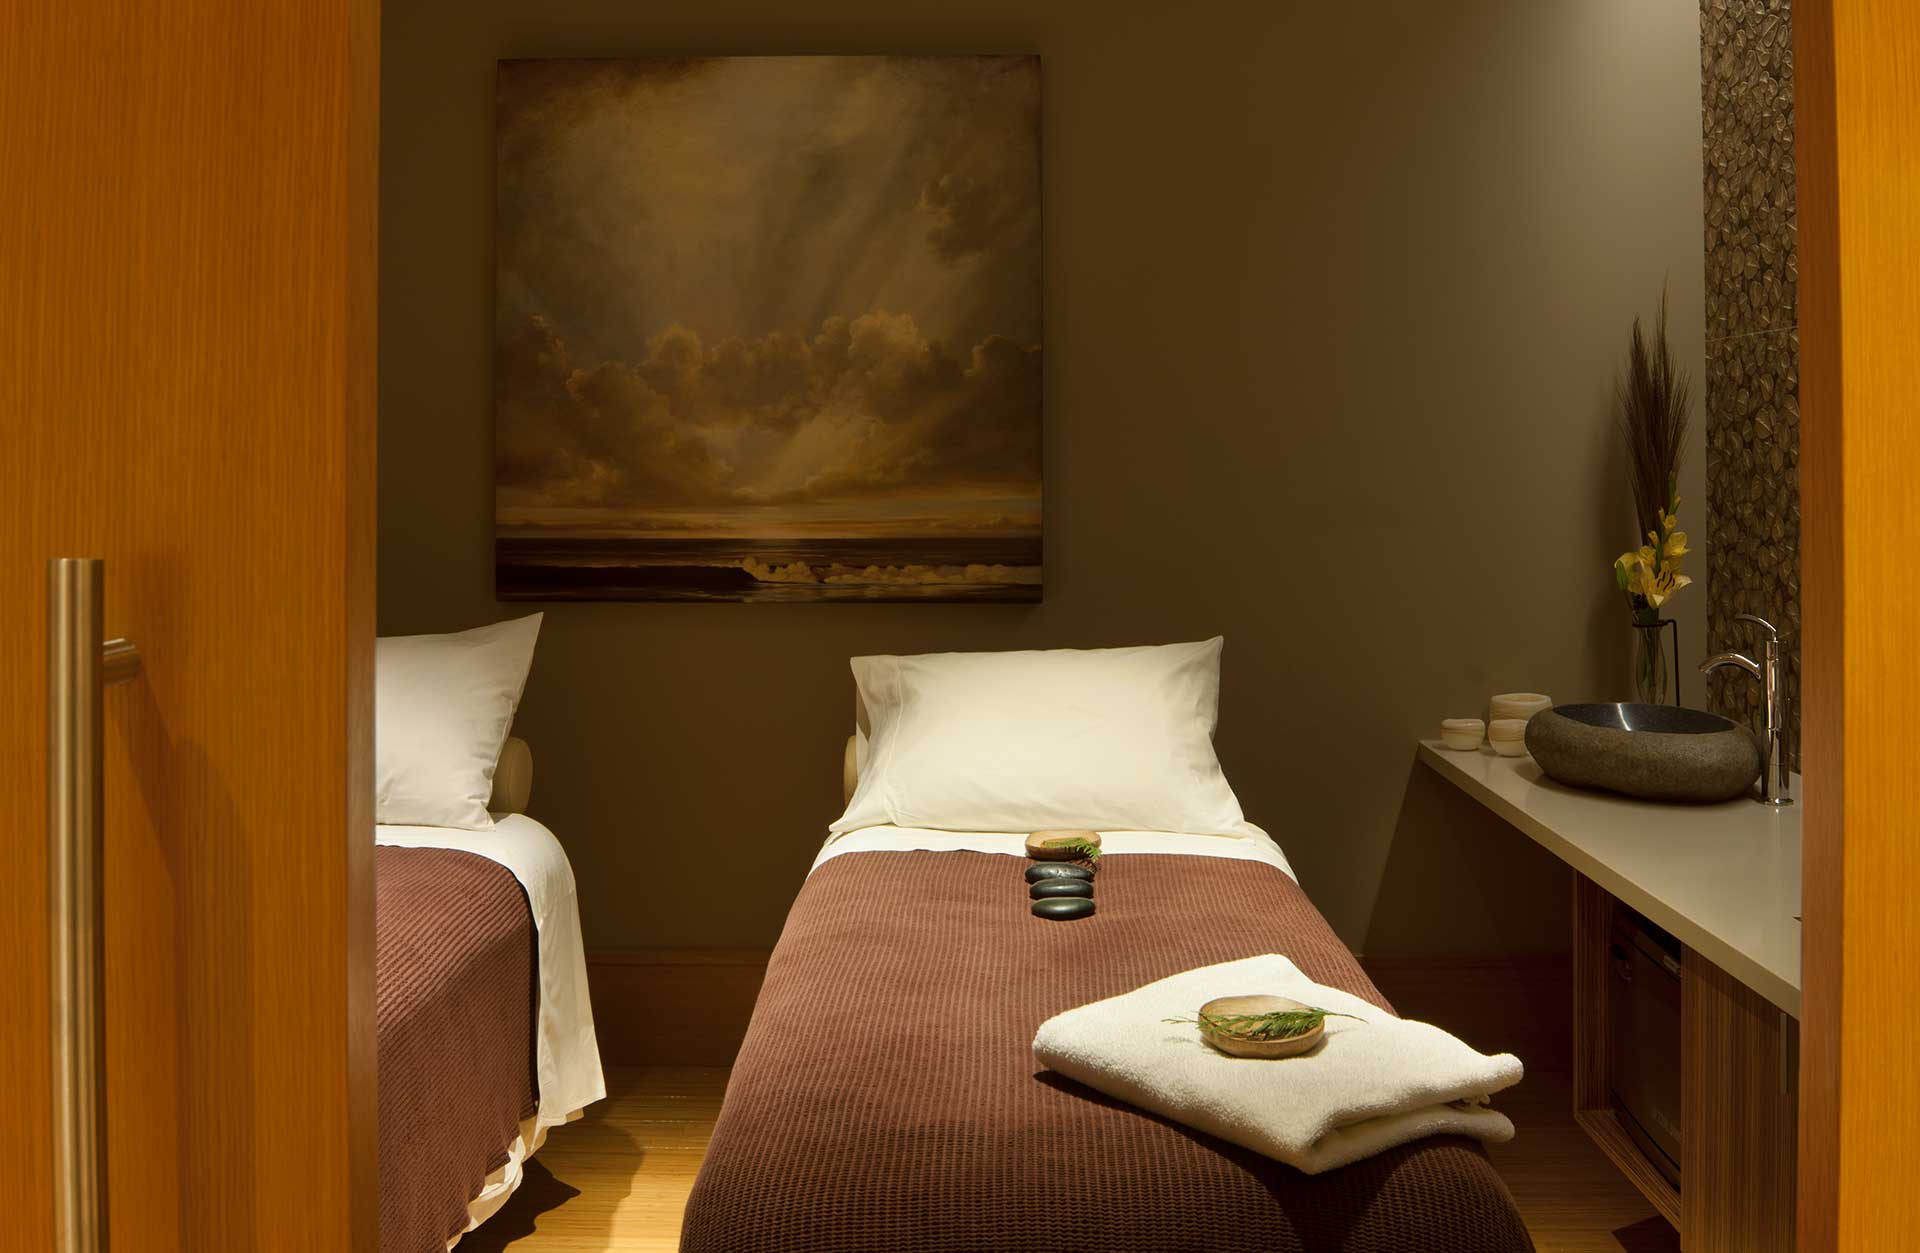 Cedarbrook Lodge Spa massage beds with stones